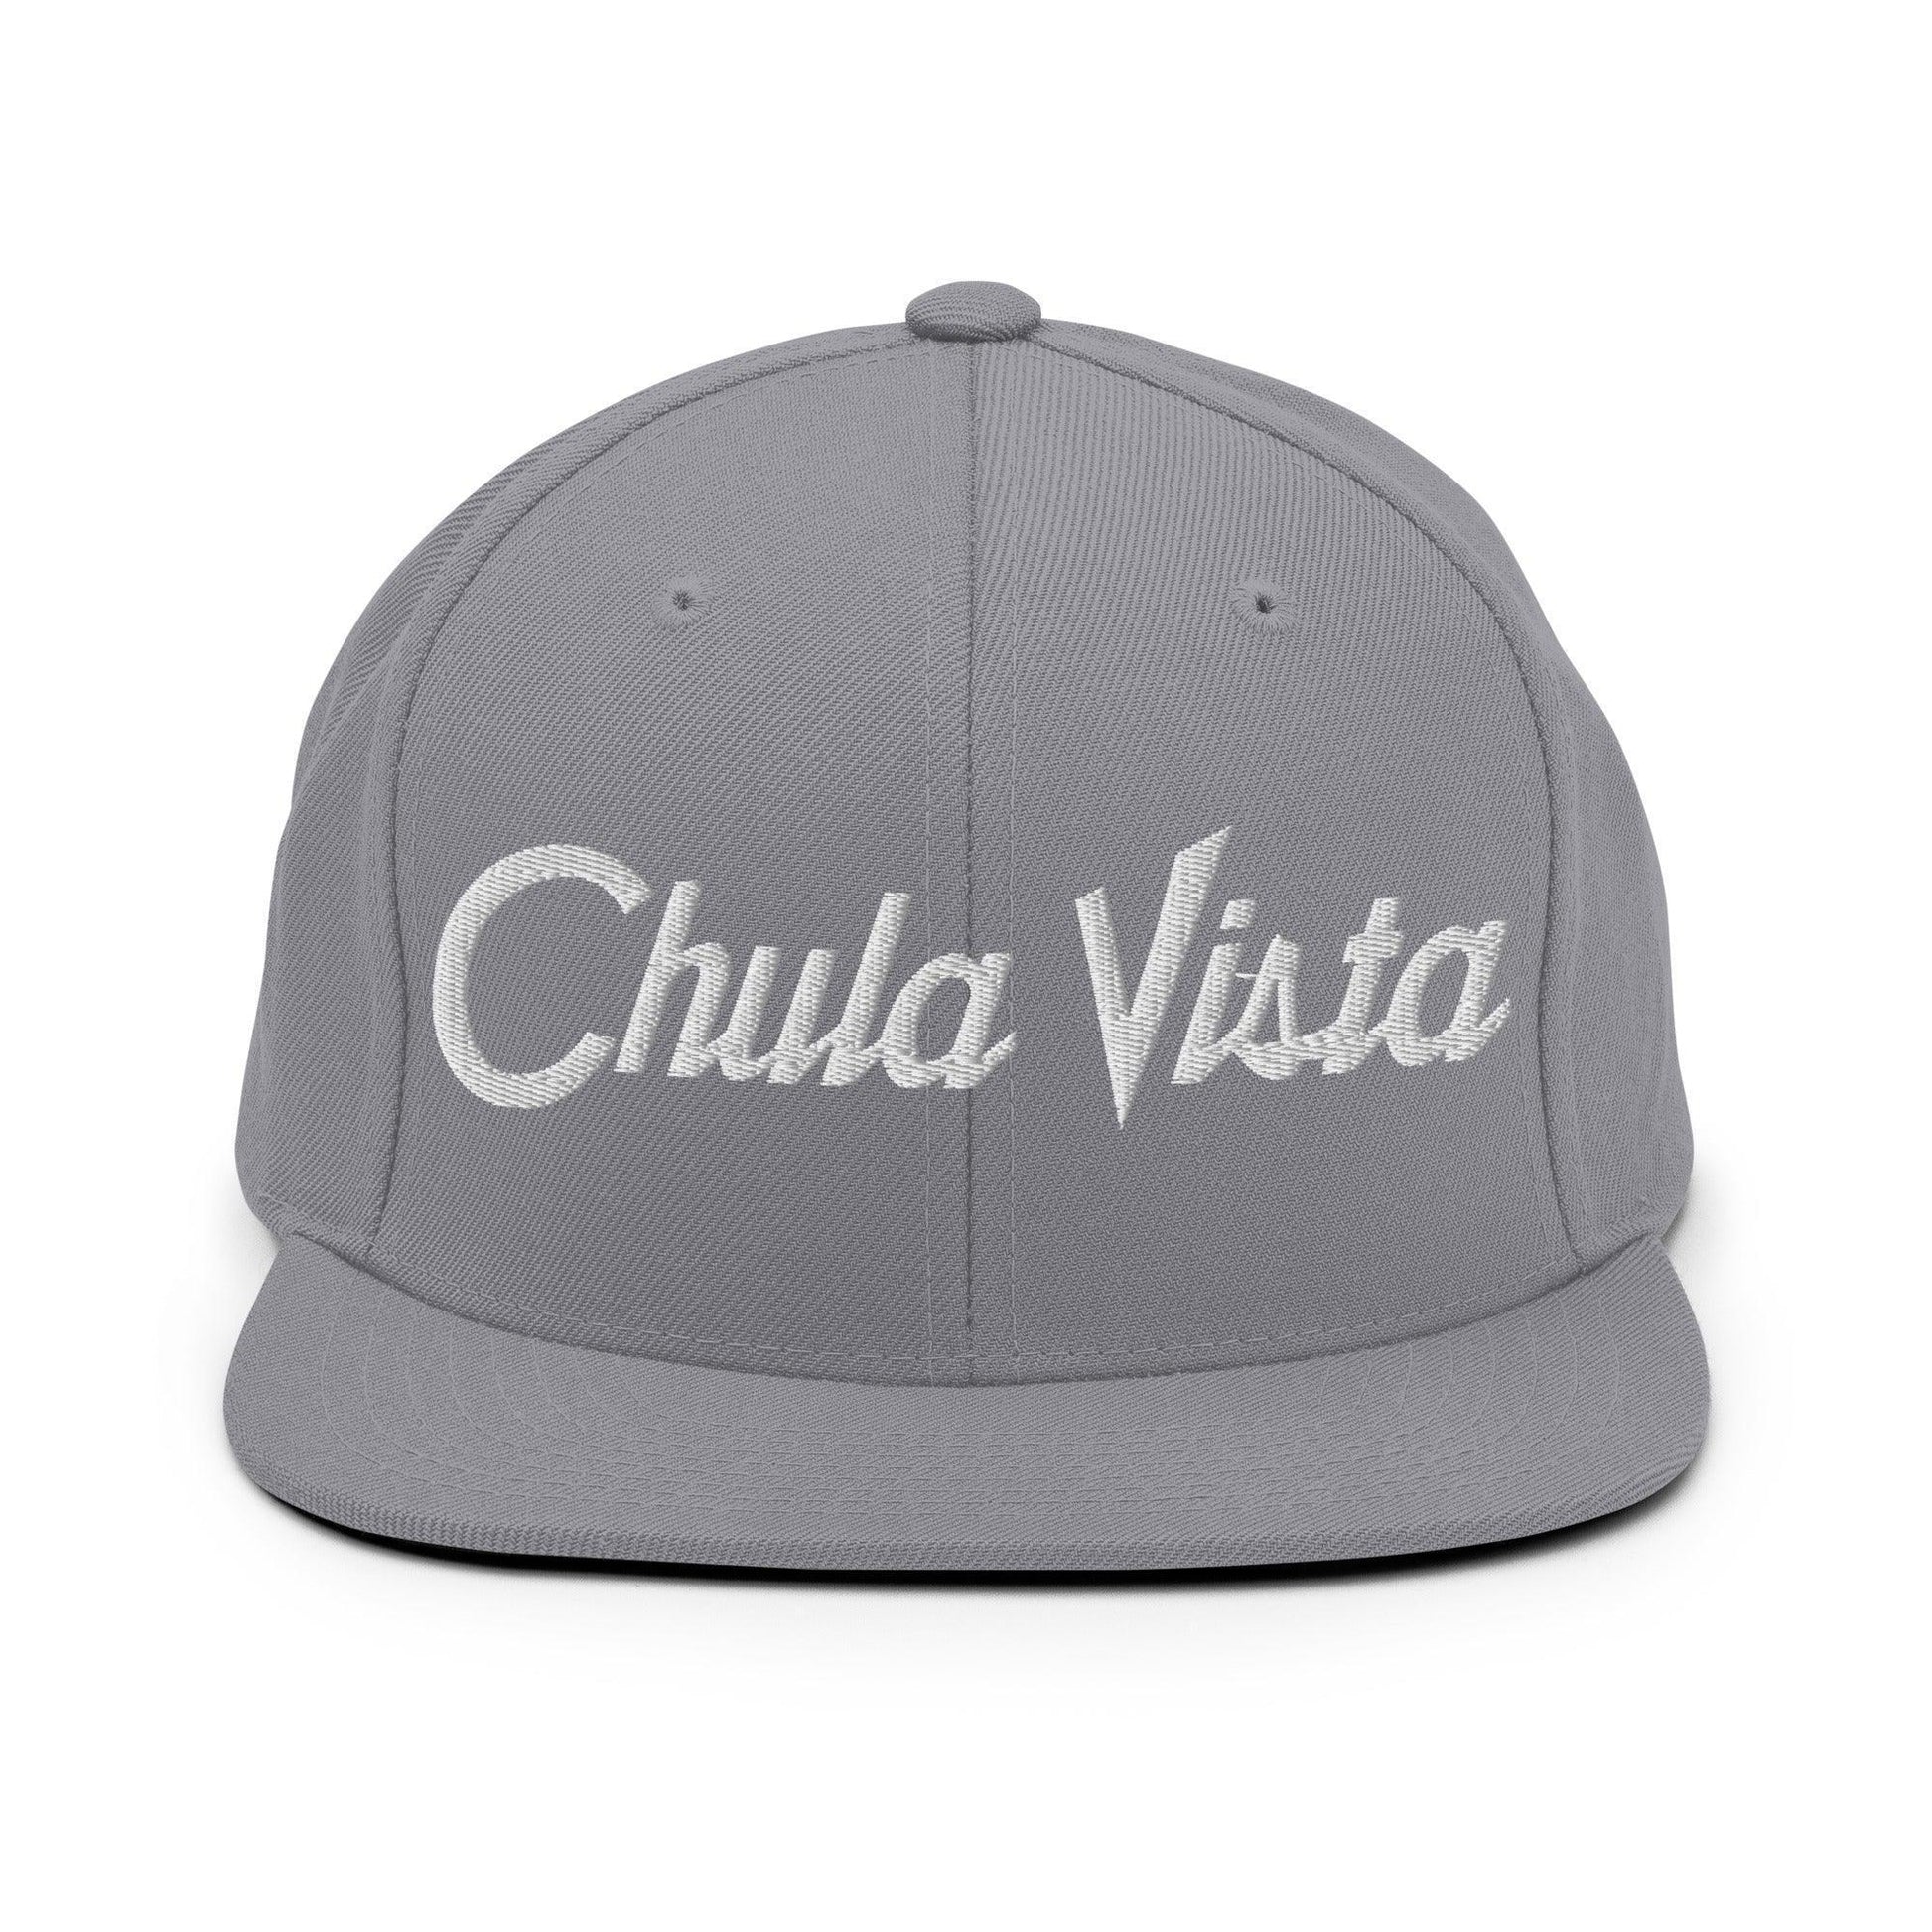 Chula Vista Script Snapback Hat Silver